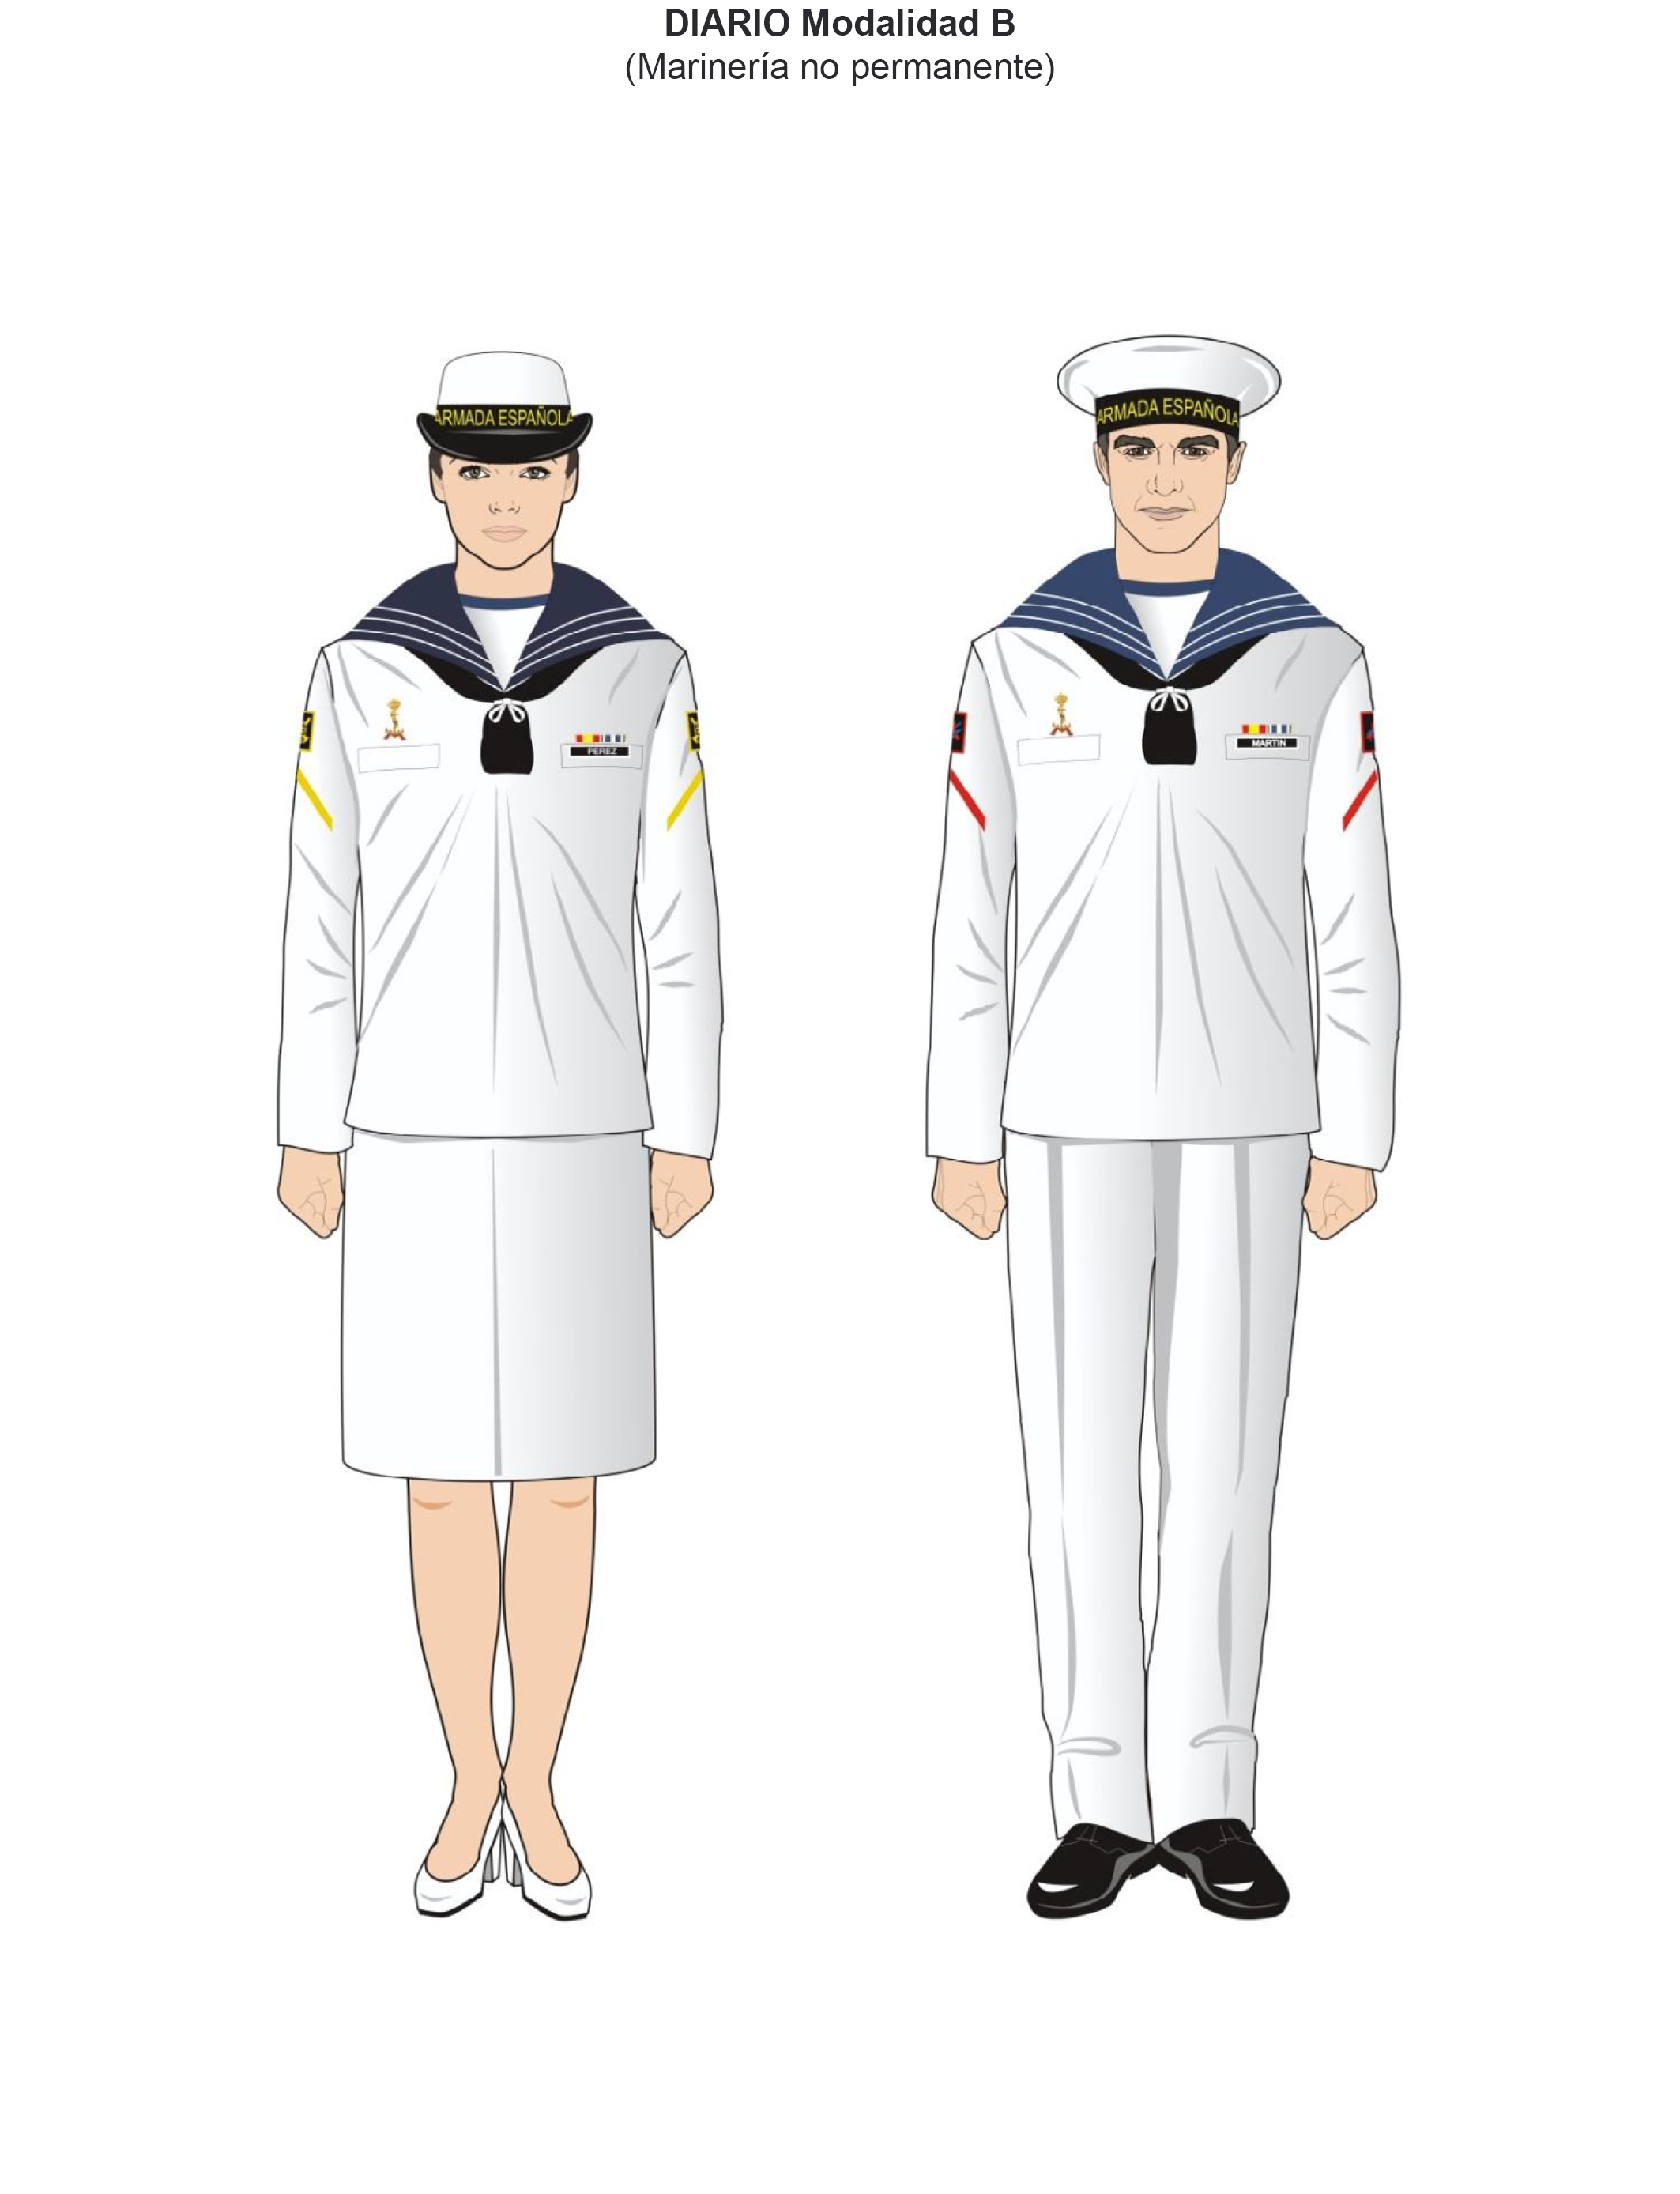 Uniforme Enfermeros Militares Enfermeria Militar